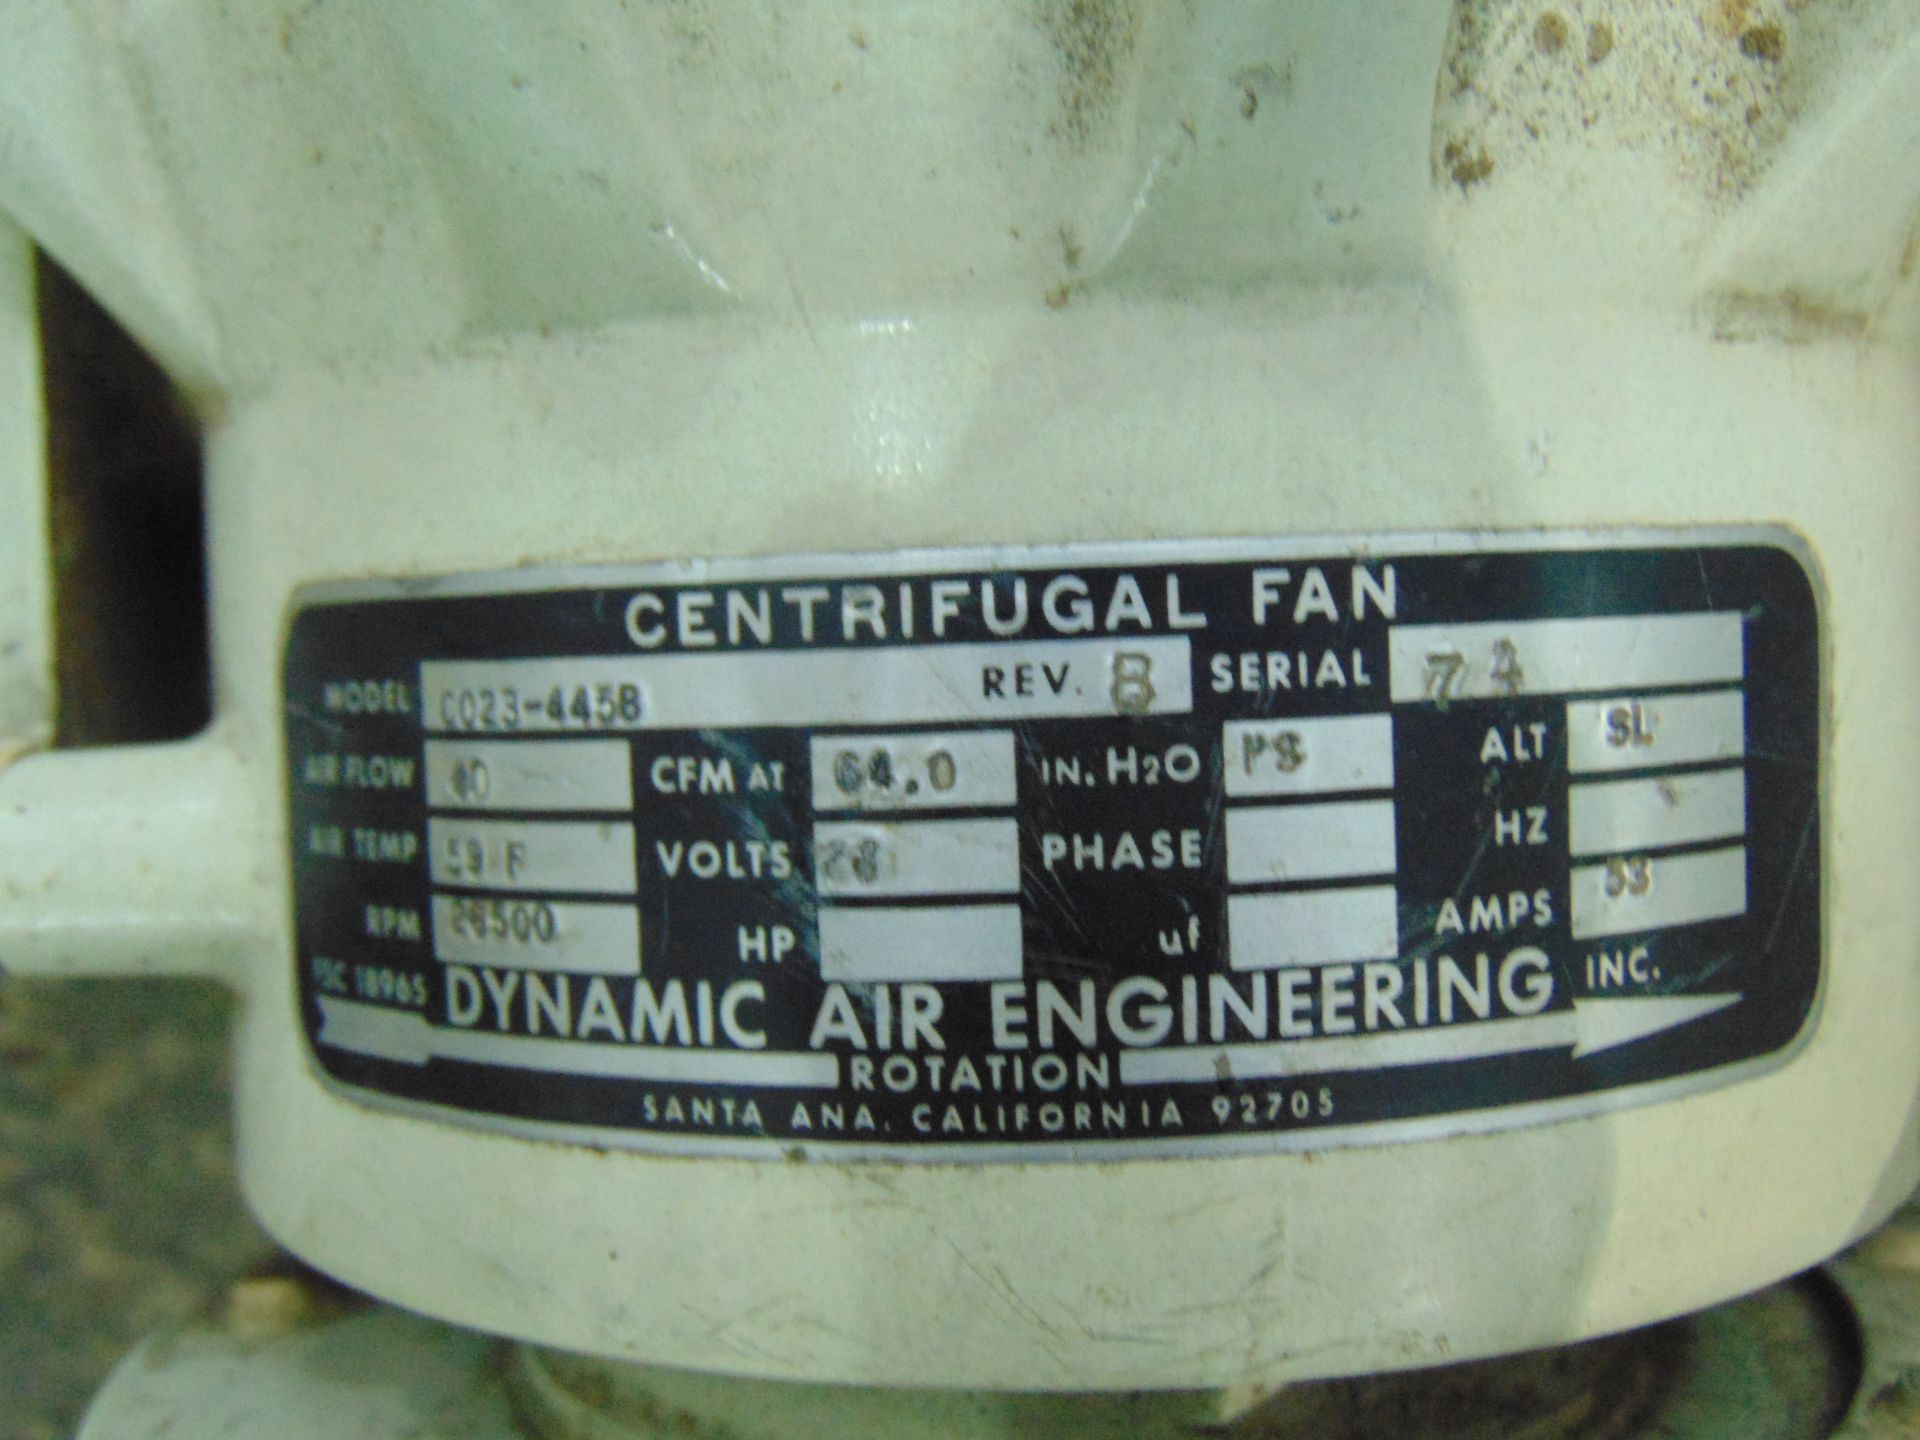 2 x Dynamic Air Engineering Centrifugal Fan Assemblies Model No CO23-445B - Image 13 of 16